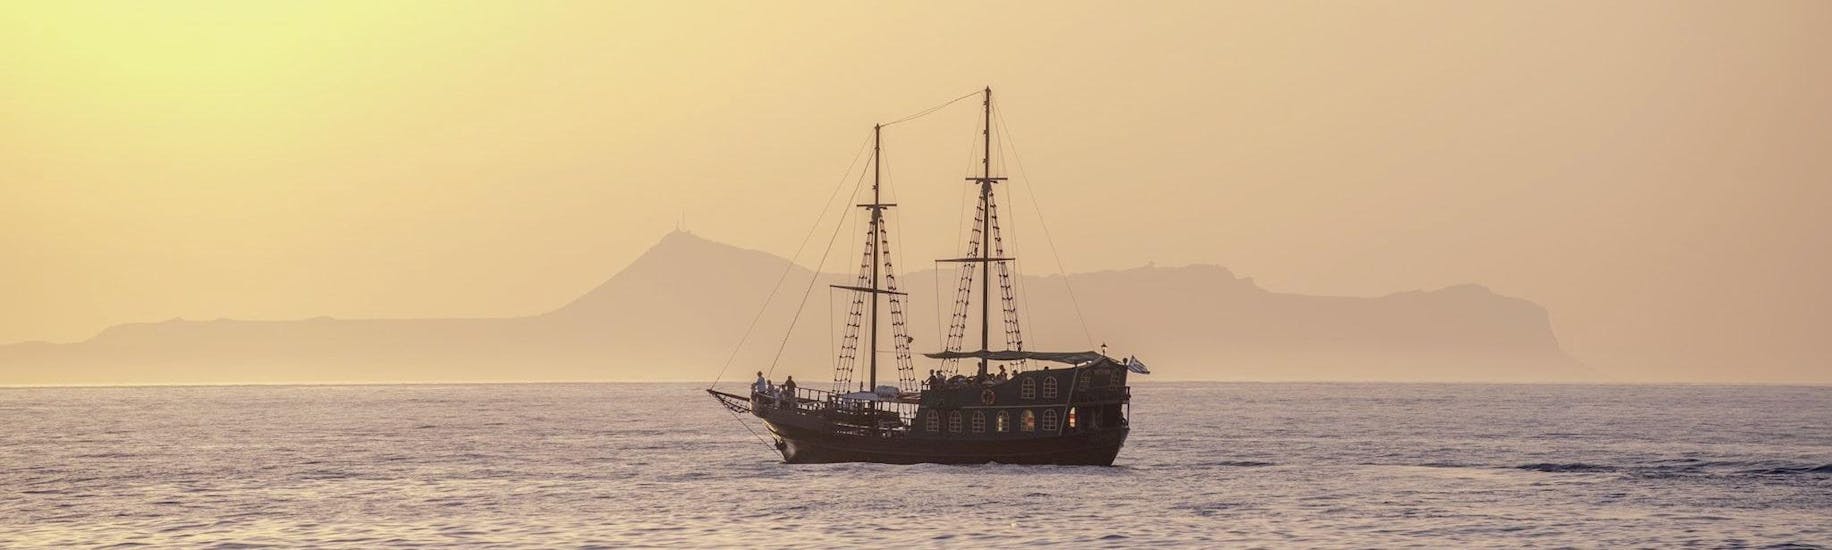 Pirate Boat Trip around Rethymno in Crete at Sunset.